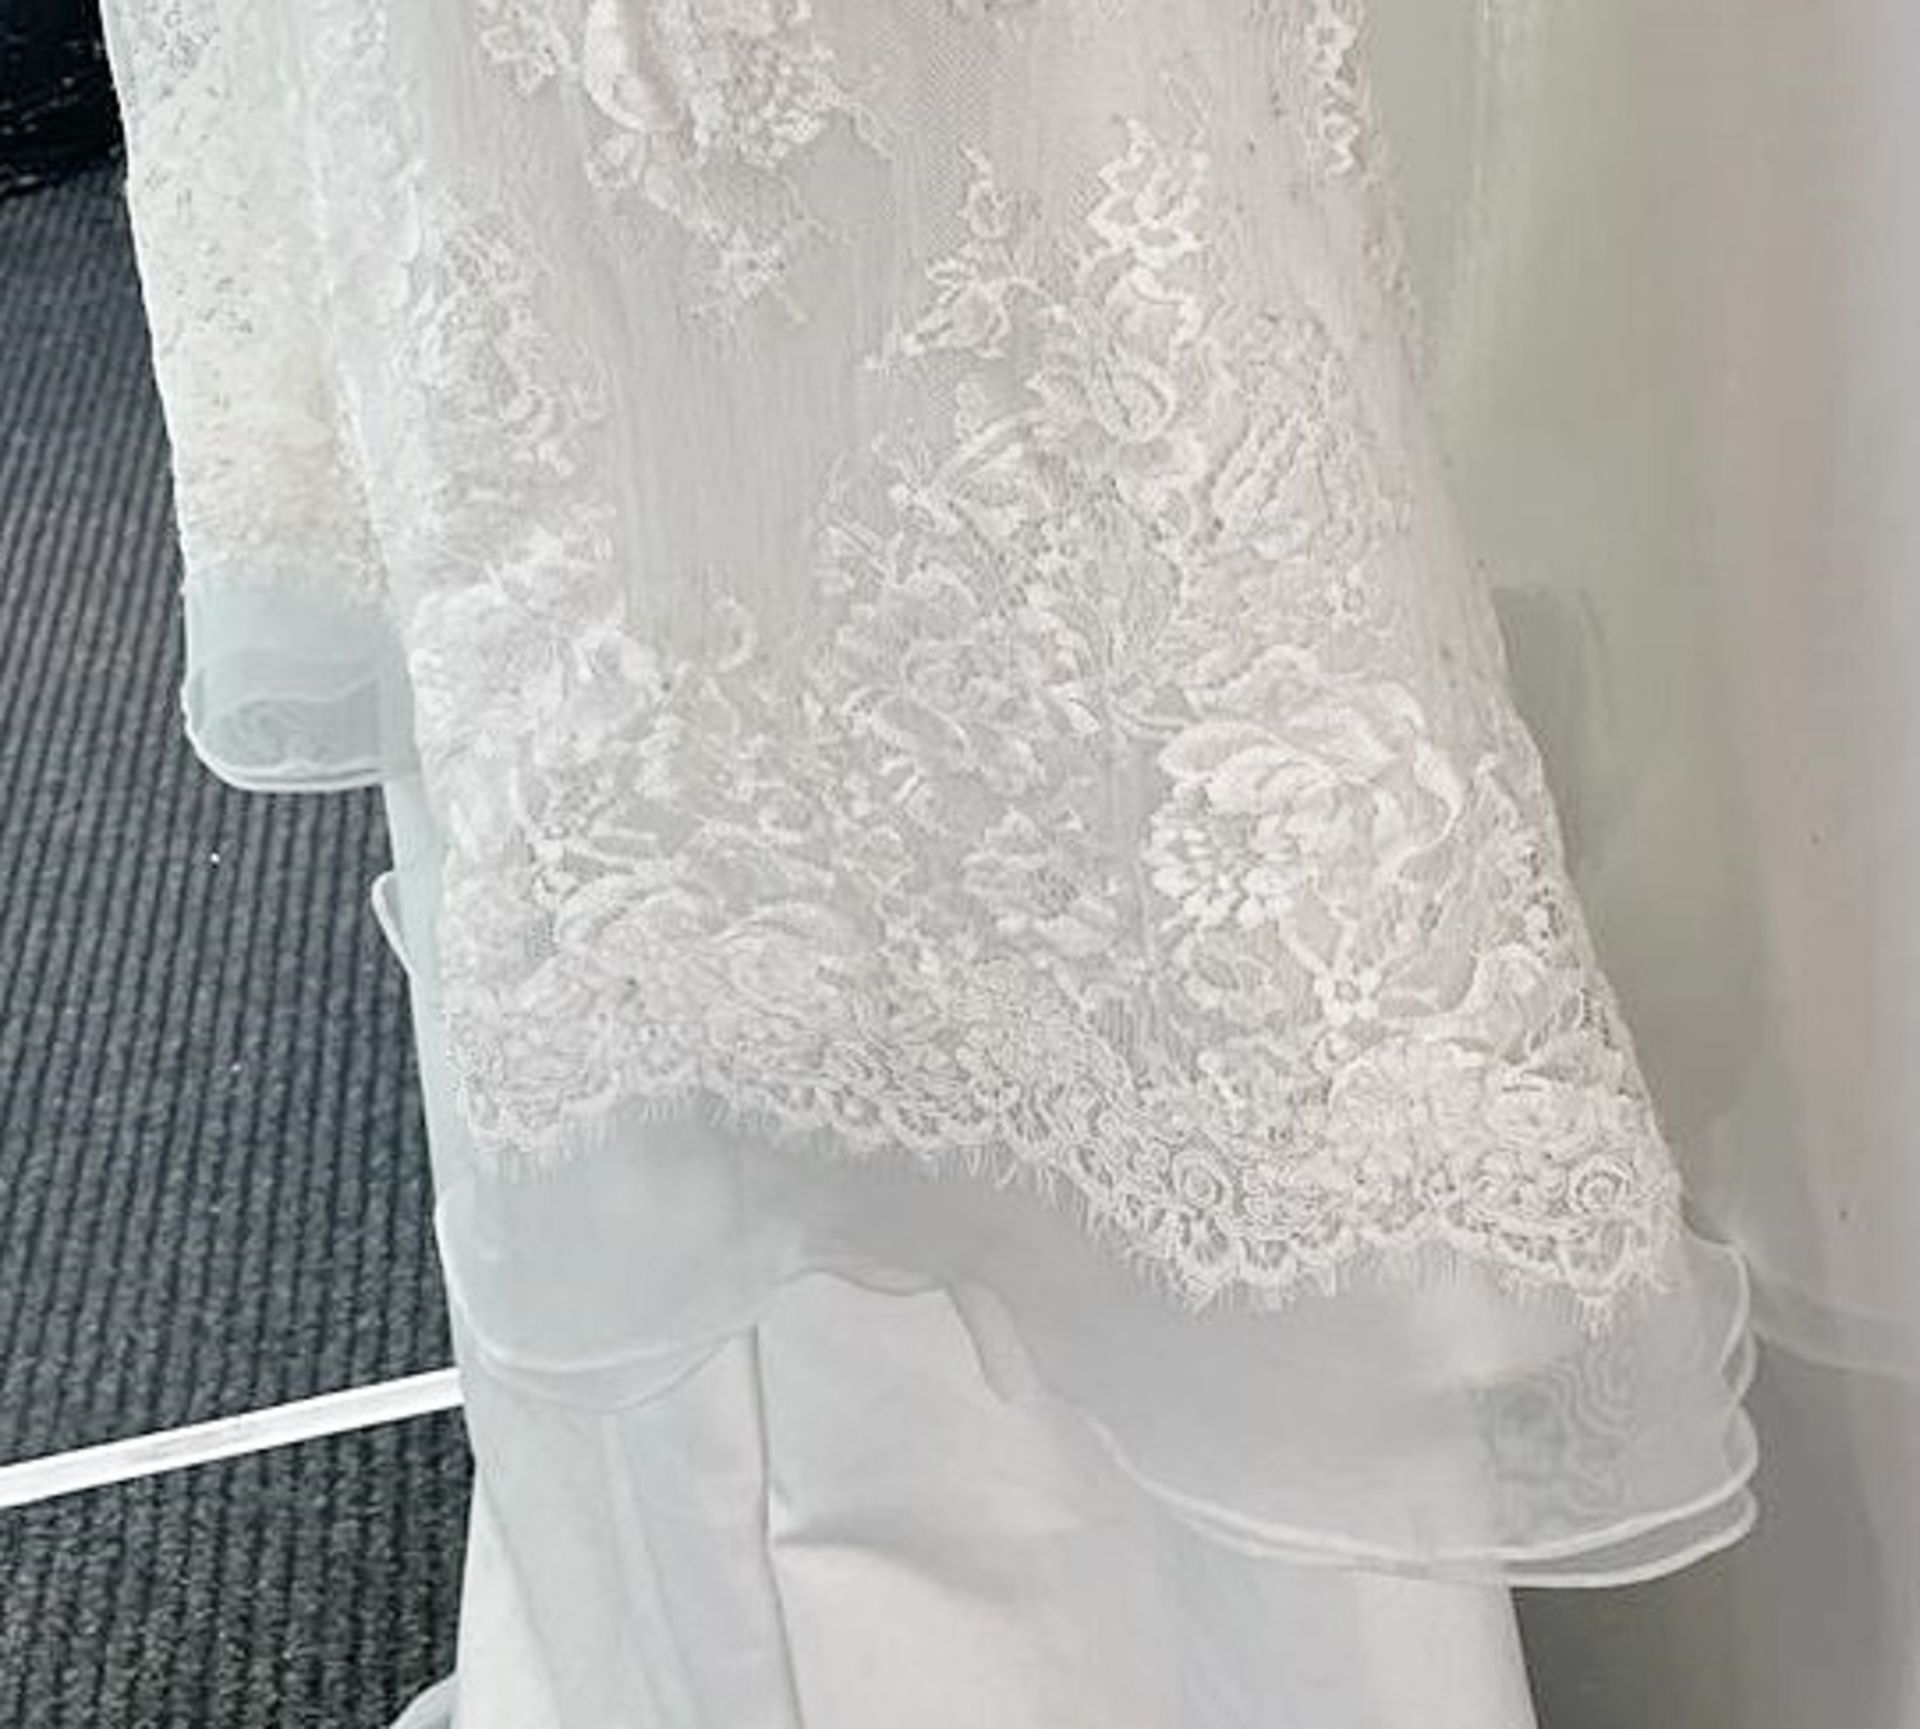 1 x ANNASUL Y 'Snow' Designer Wedding Dress Bridal Gown - Size: UK 12 - Original RRP £1,450 - Image 9 of 16